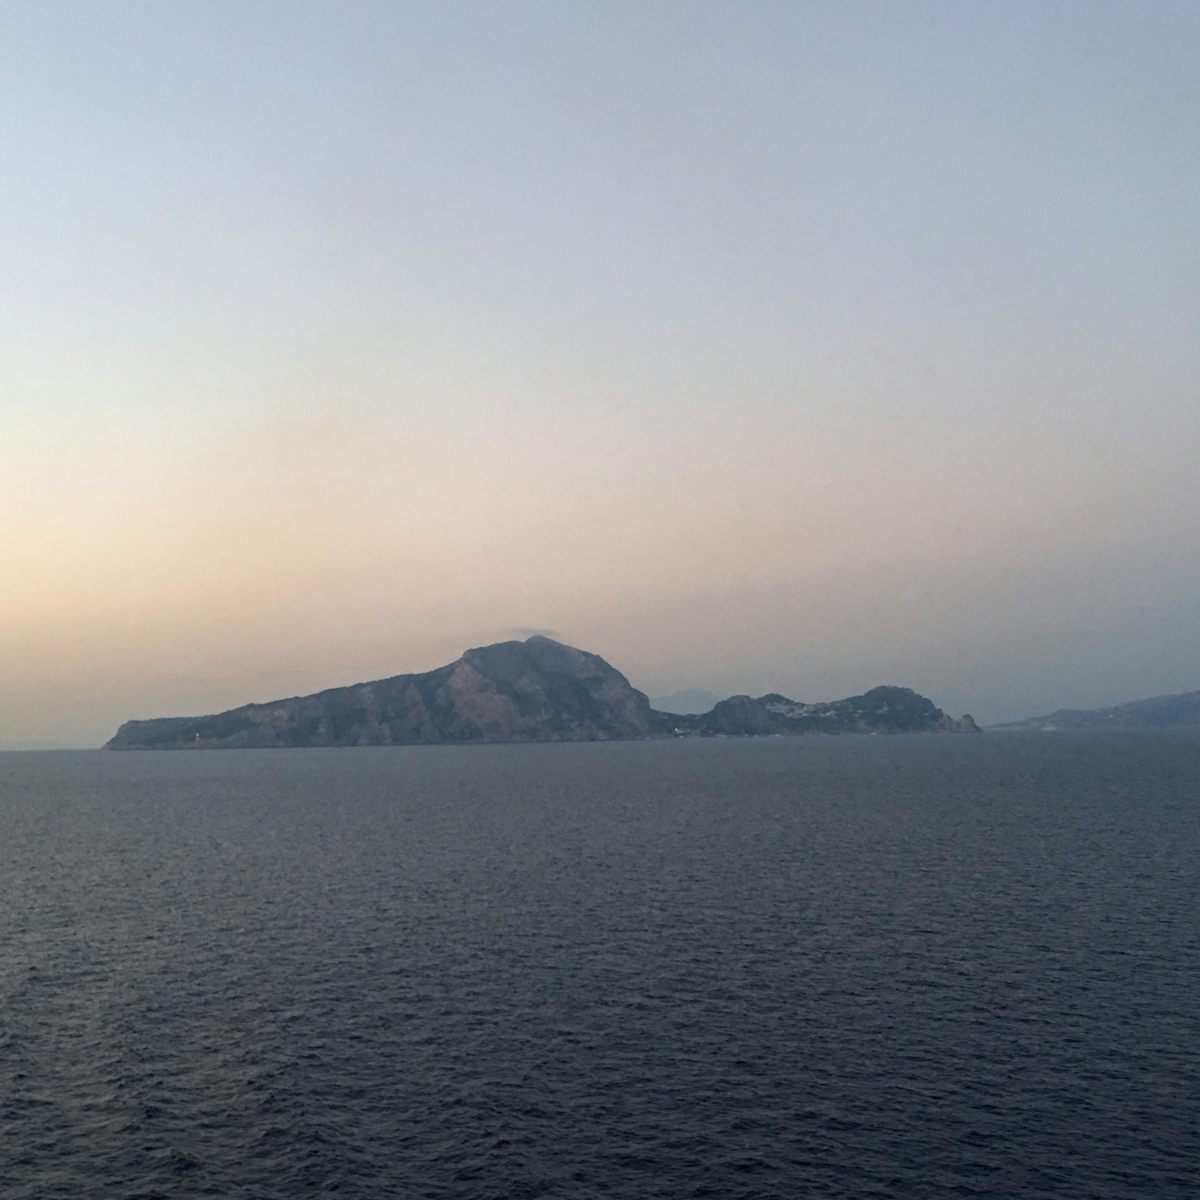 The island of Capri.